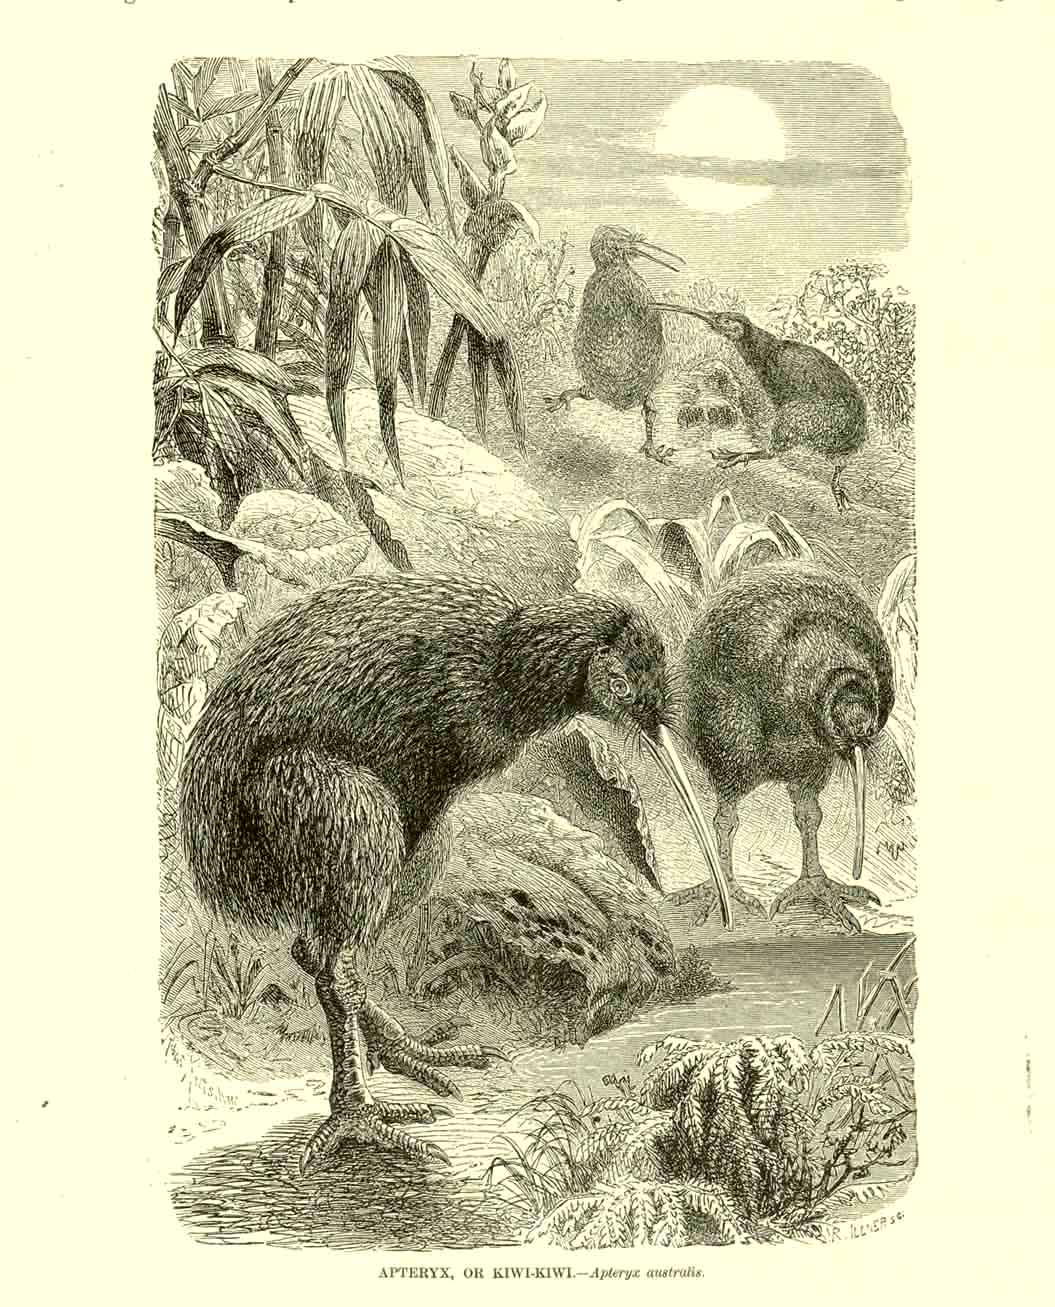 "Apteryx, or Kiwi-Kiwi Aptpteryx australis"  Wood engraving published ca 1890. On the reverse side is text about the kiwi.